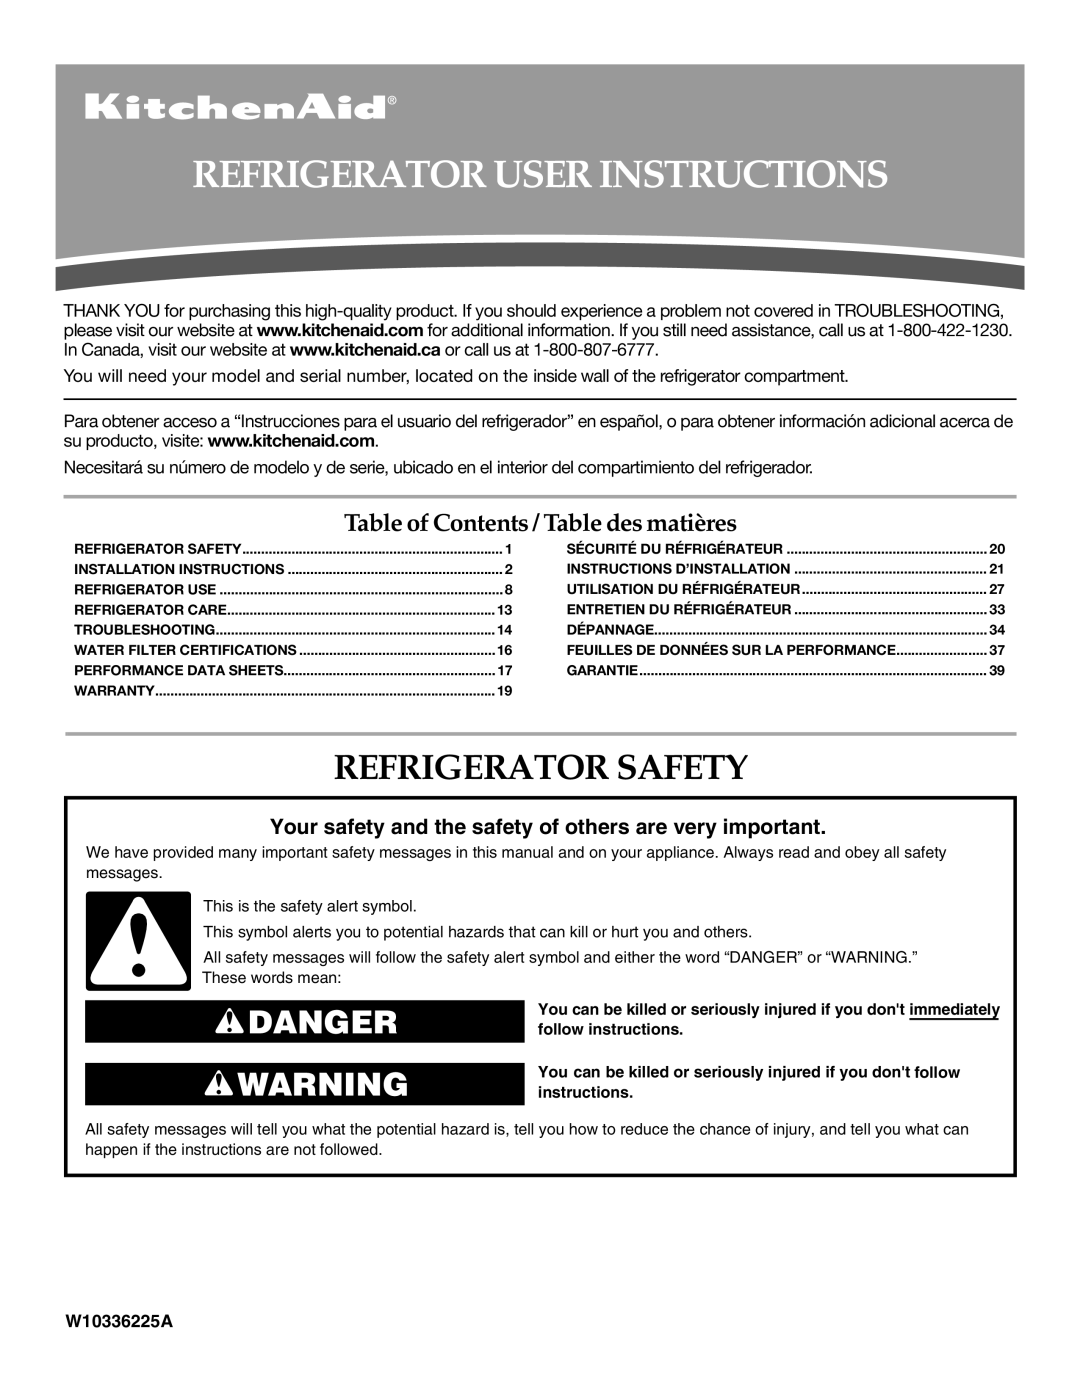 KitchenAid KFXS25RYWH installation instructions Refrigerator User Instructions, Refrigerator Safety 